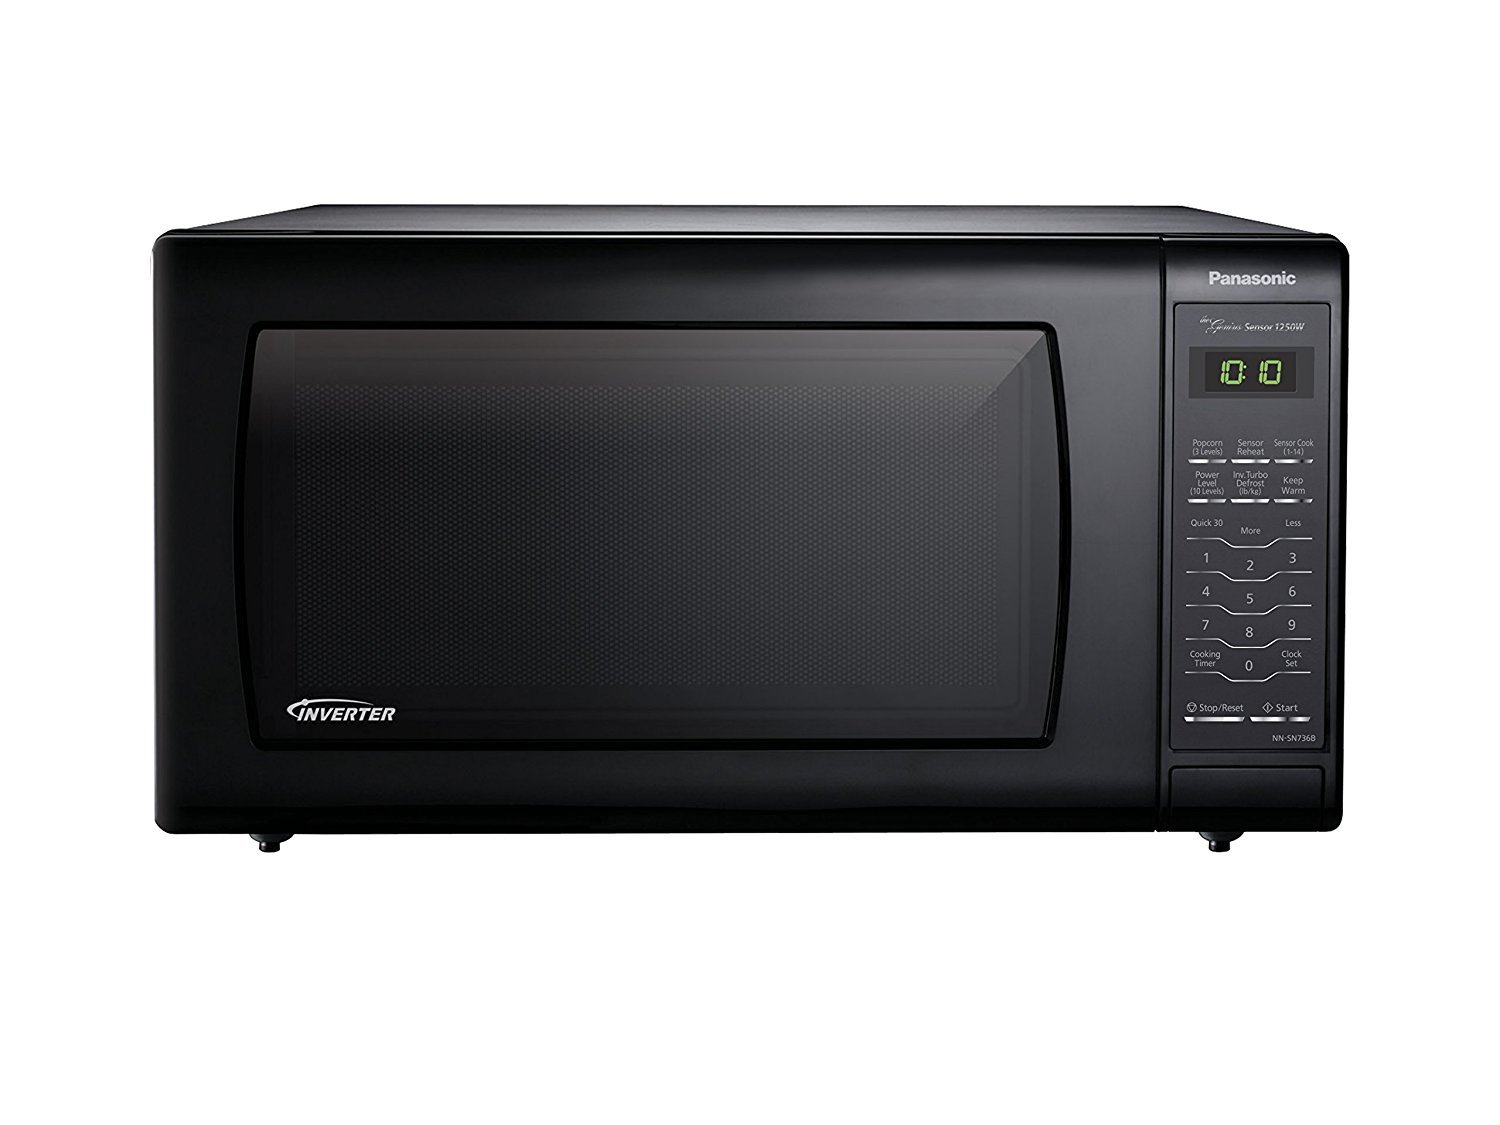 Microwave Oven Compact Countertop Panasonic Electric Black 1250 Watt 1.6 cu. ft. Inverter Cookware With Free Pot Holders